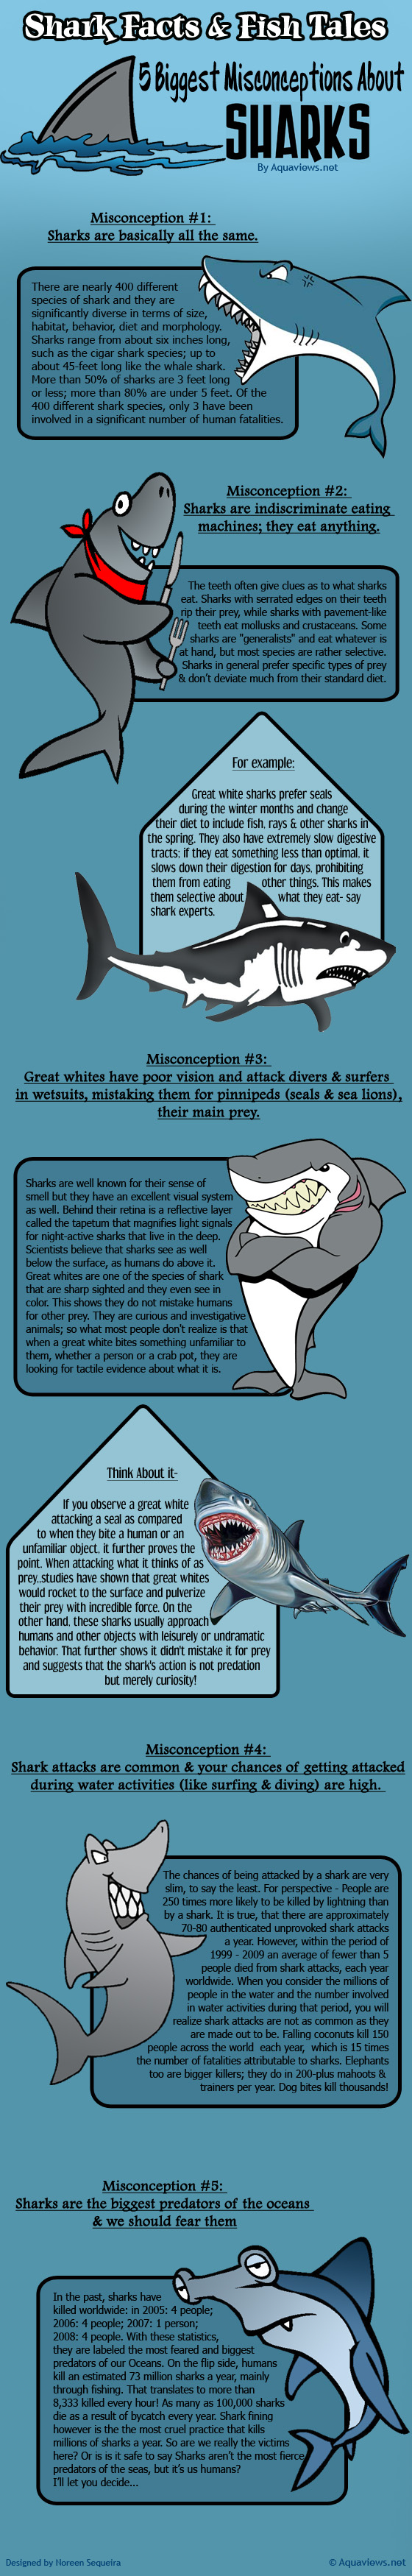 Shark-Infographic